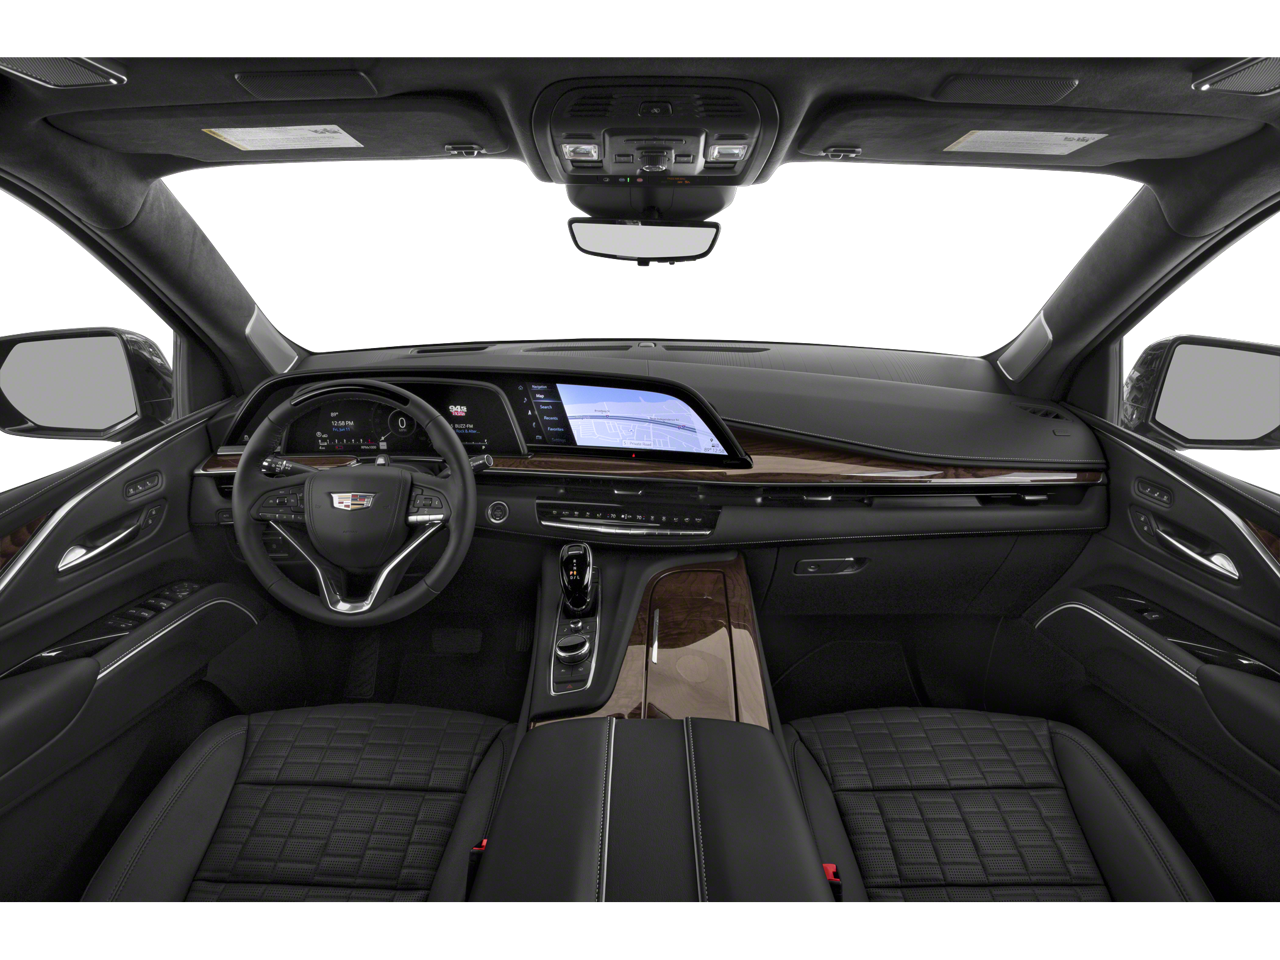 2021 Cadillac Escalade Sport 4x4 4dr SUV